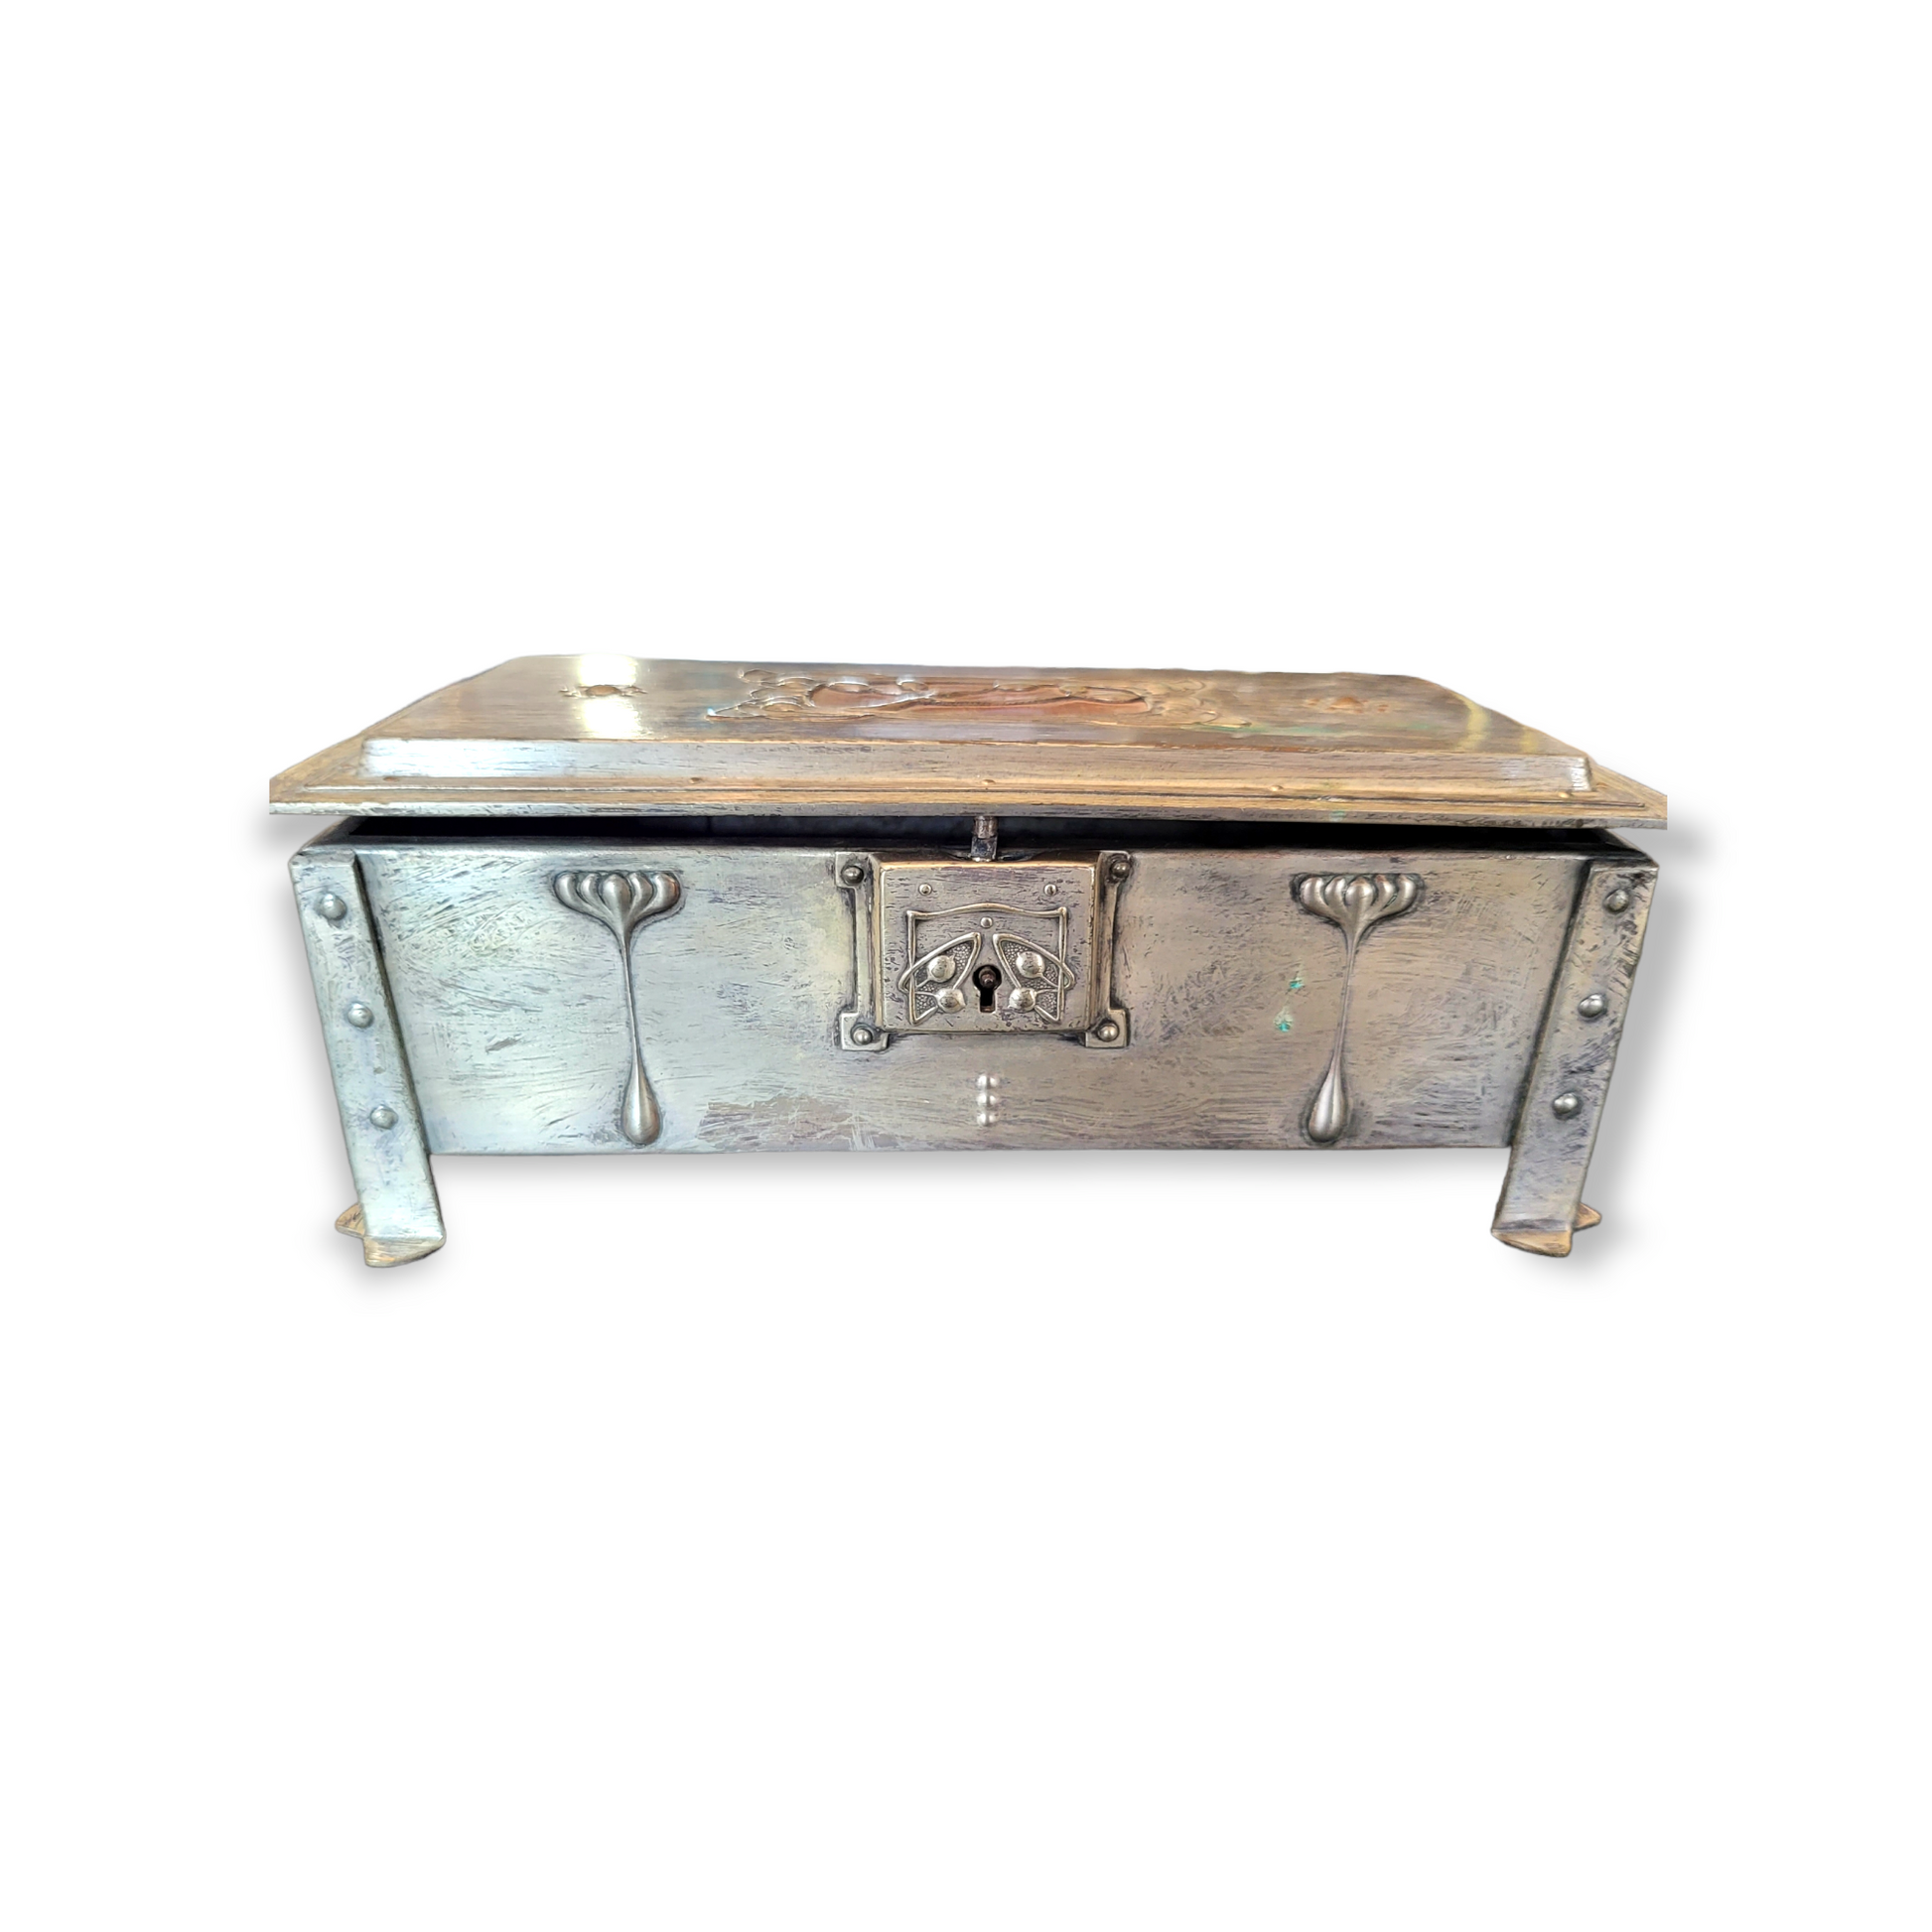 A. E. Jones & Co. Birmingham, England Silver over Copper Art Nouveau Trinket Box